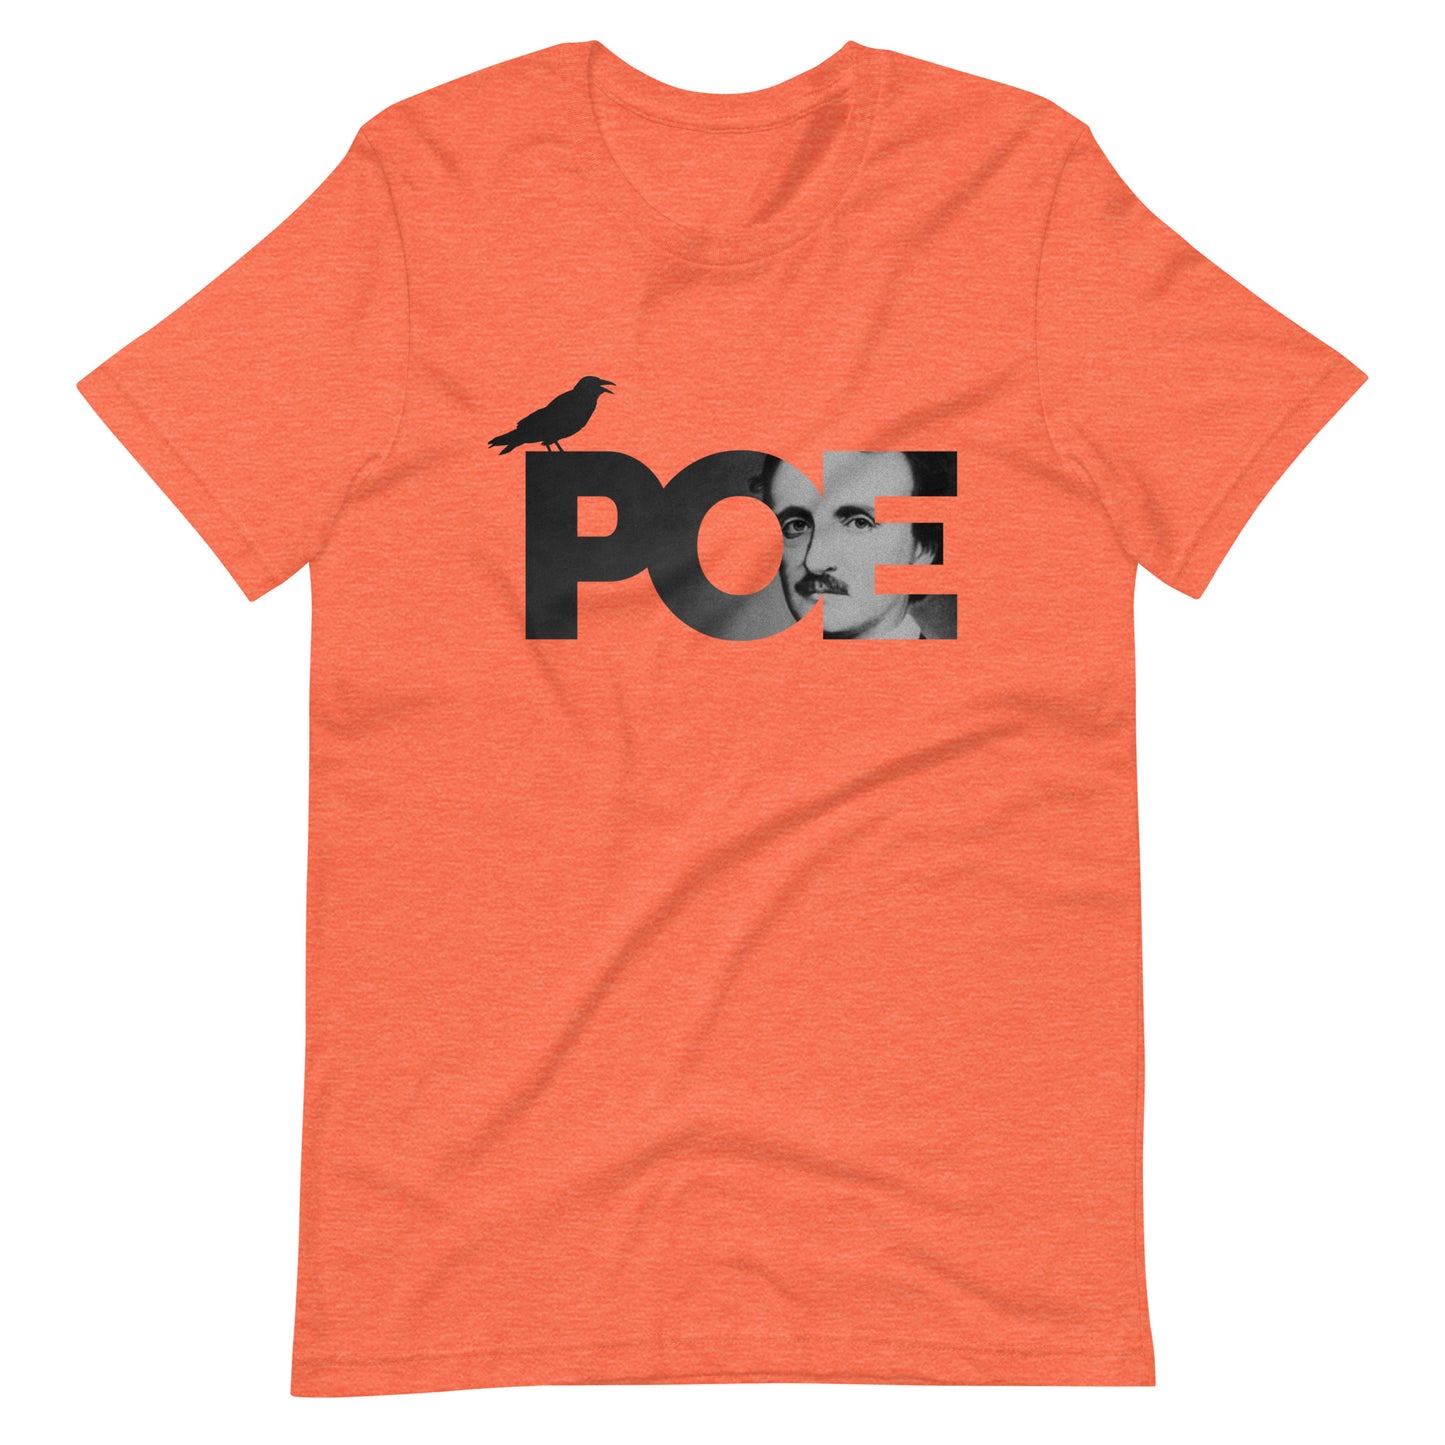 Women's Edgar Allan Poe t-shirt - Heather Orange Front